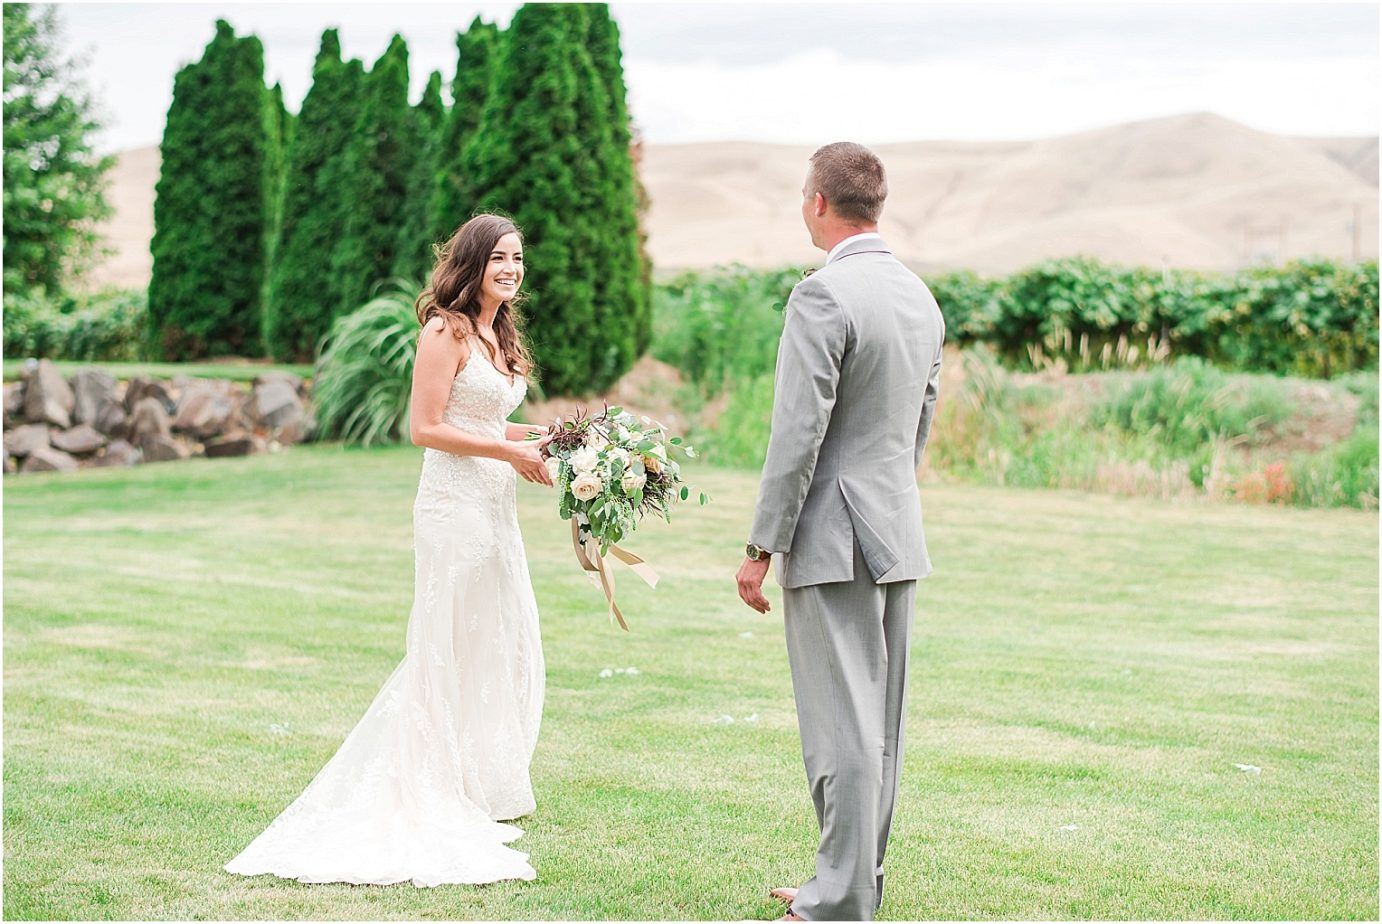 Romantic backyard wedding prosser photographer calvin and kelly first look